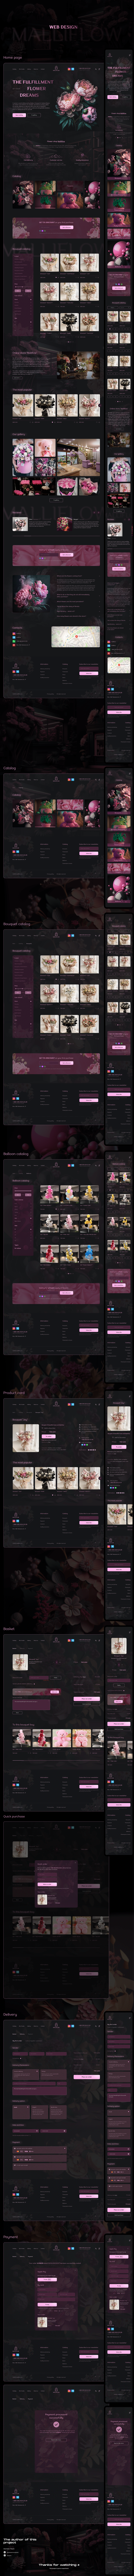 Figma flofers florist Flower Shop Web Design  Website веб-дизайн